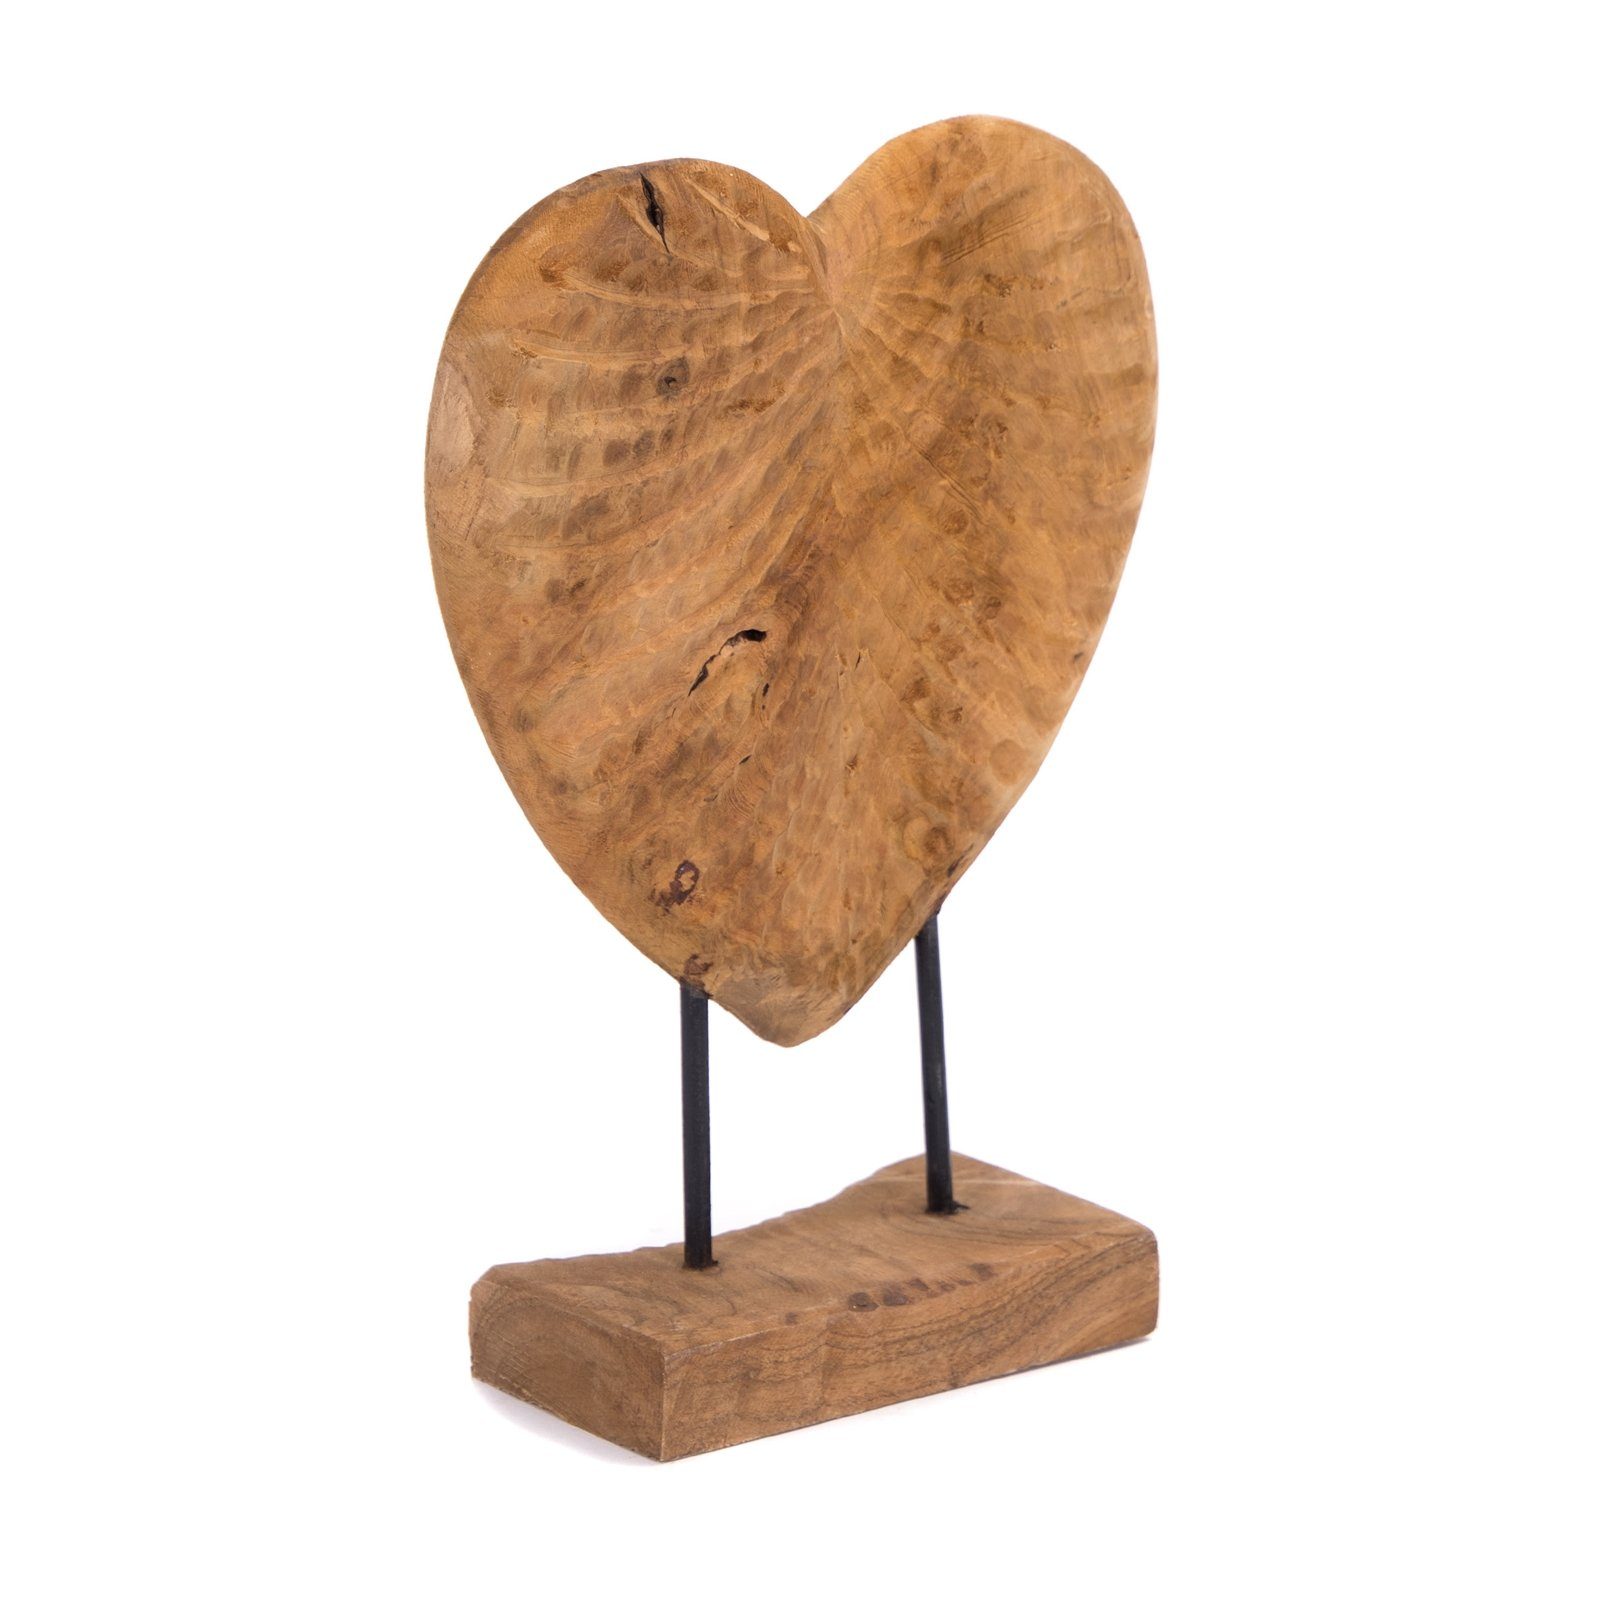 CREEDWOOD Skulptur HERZ FIGUR "LOVE", Holz, 36 cm, Herz Skulptur, Deko Aufsteller